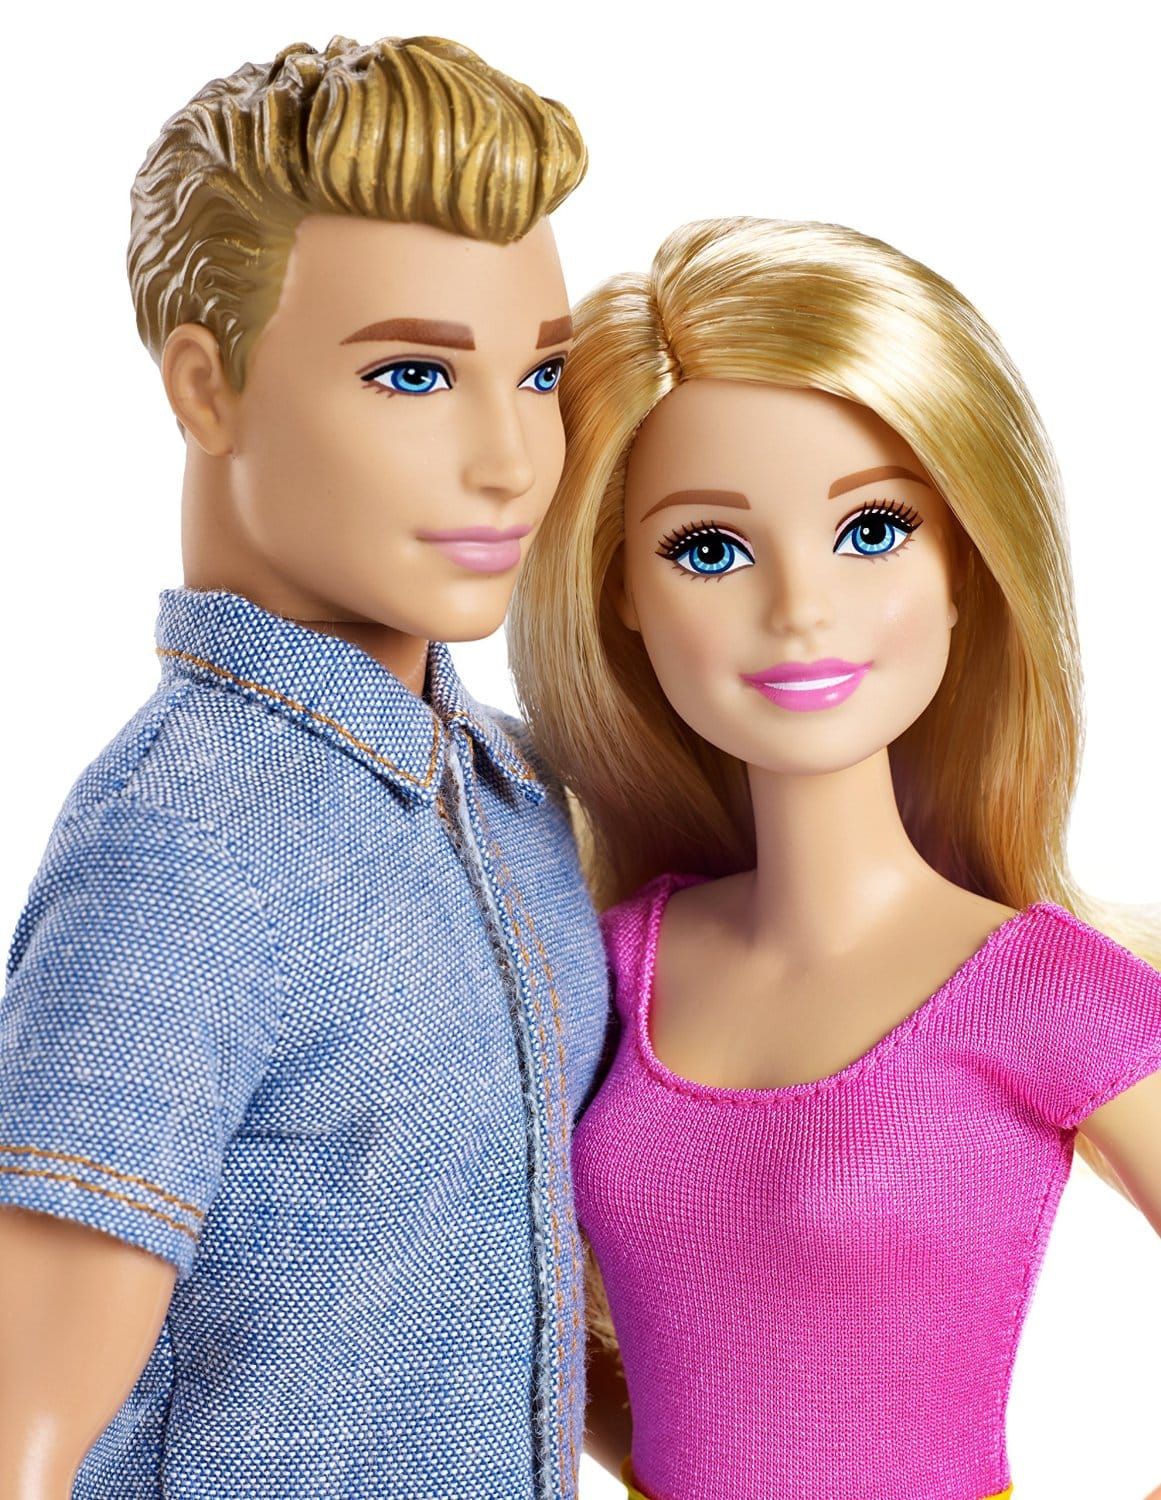 image Of Barbie And Ken. Barbie and ken, Barbie and ken costume, Ken doll